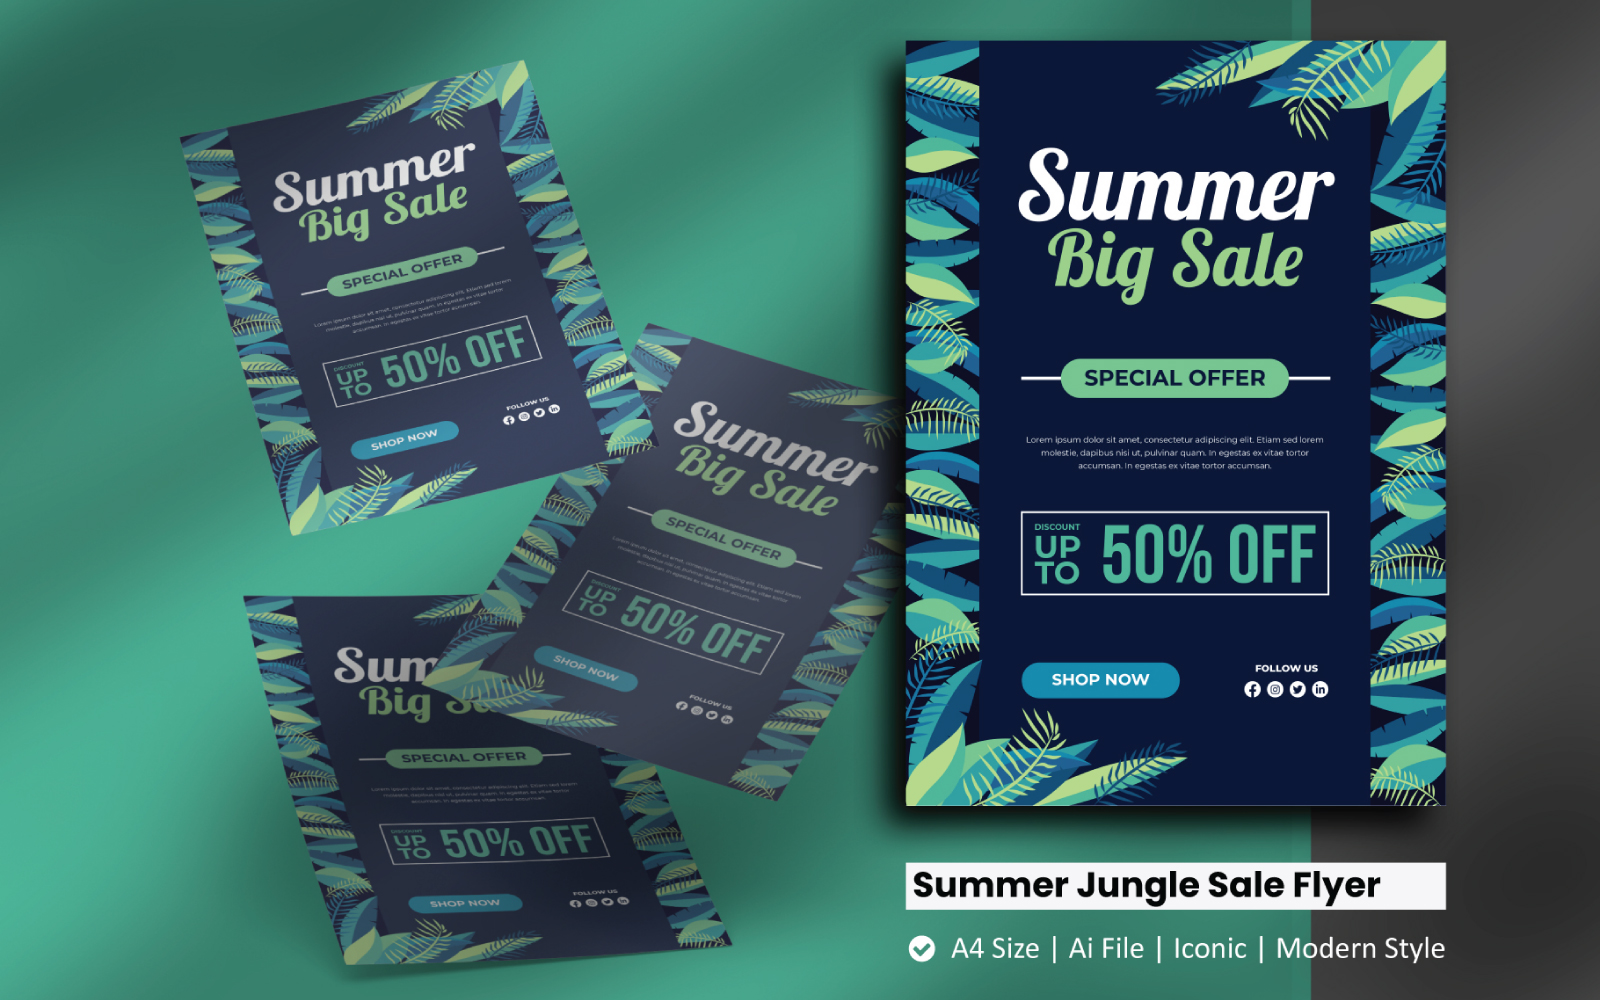 Summer Jungle Sale Flyer Corporate Identity Template